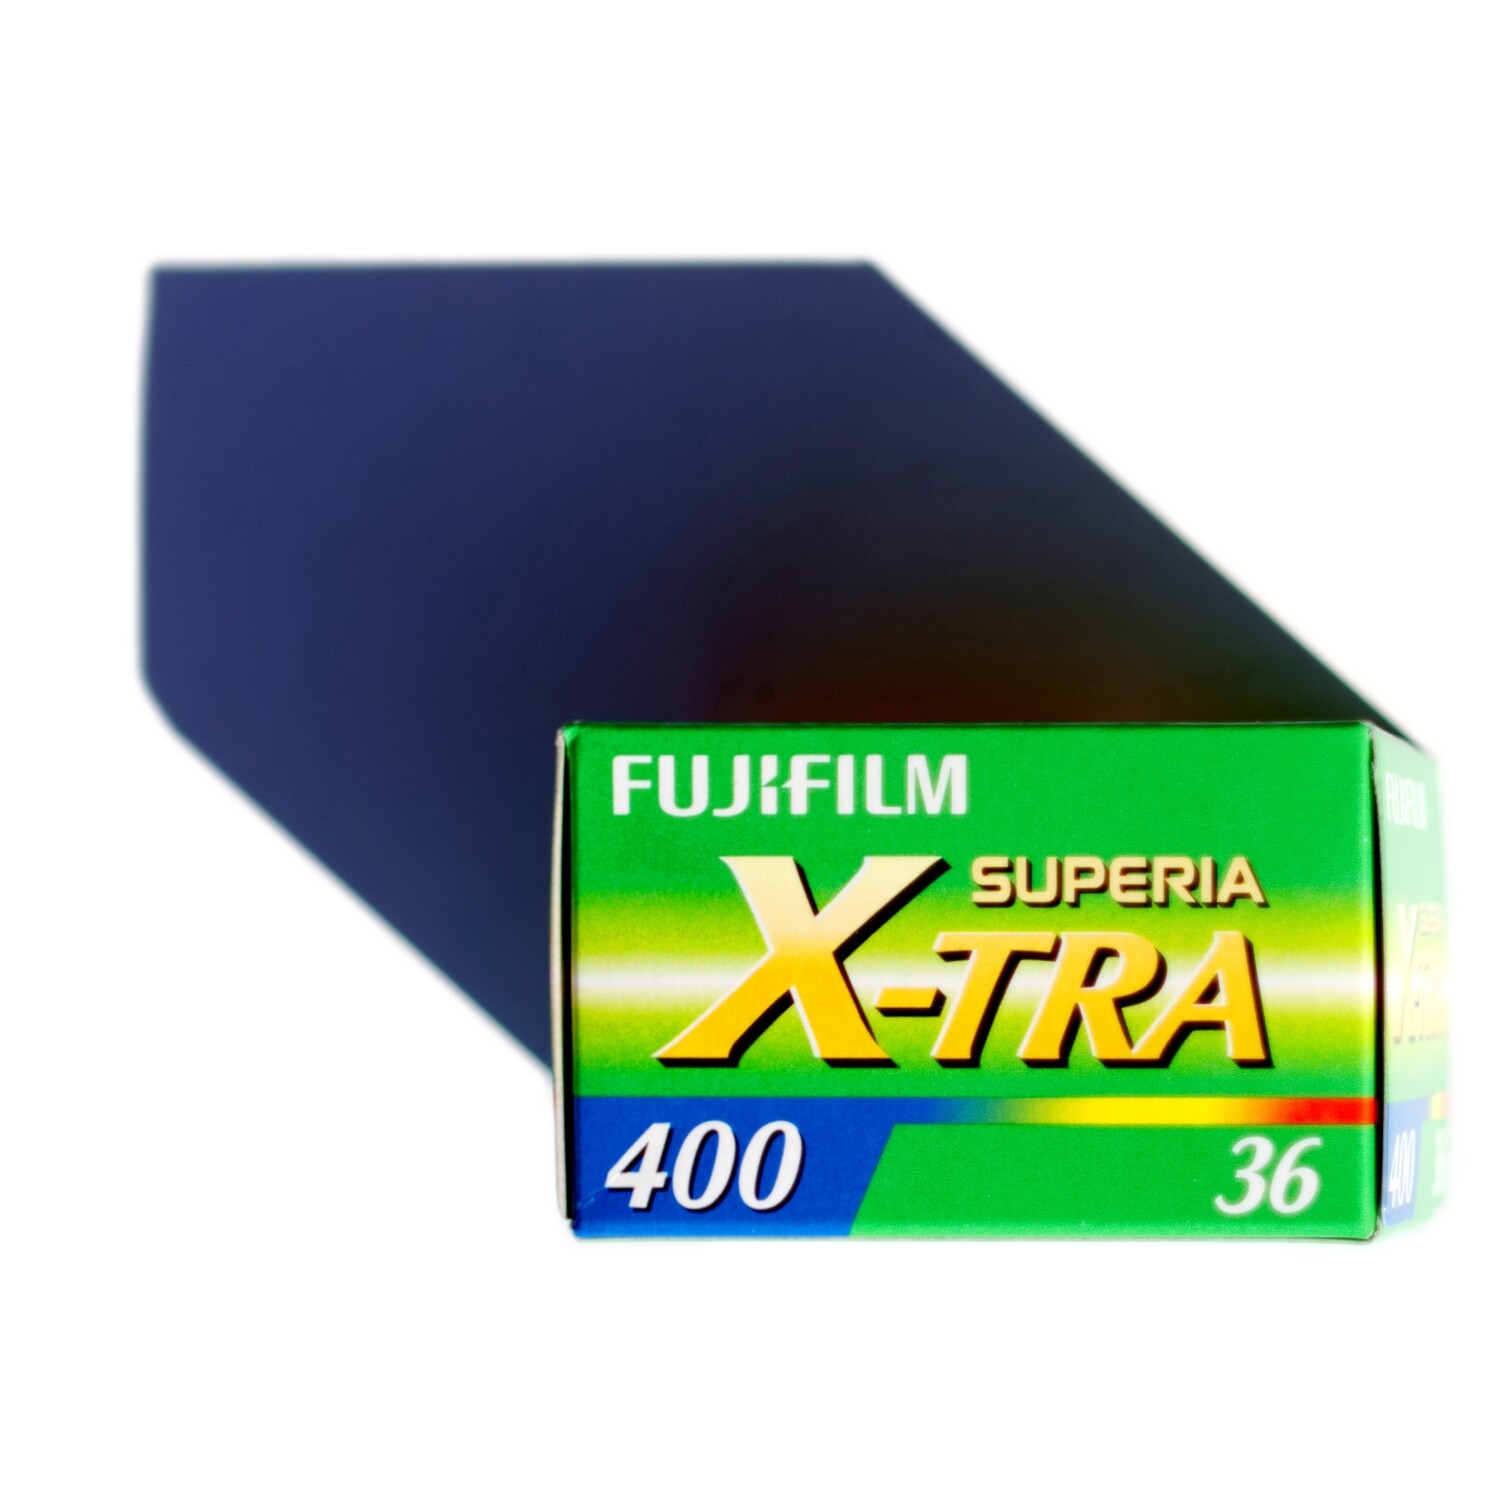 Fujifilm Superia X-Tra 400 35mm - Single Roll